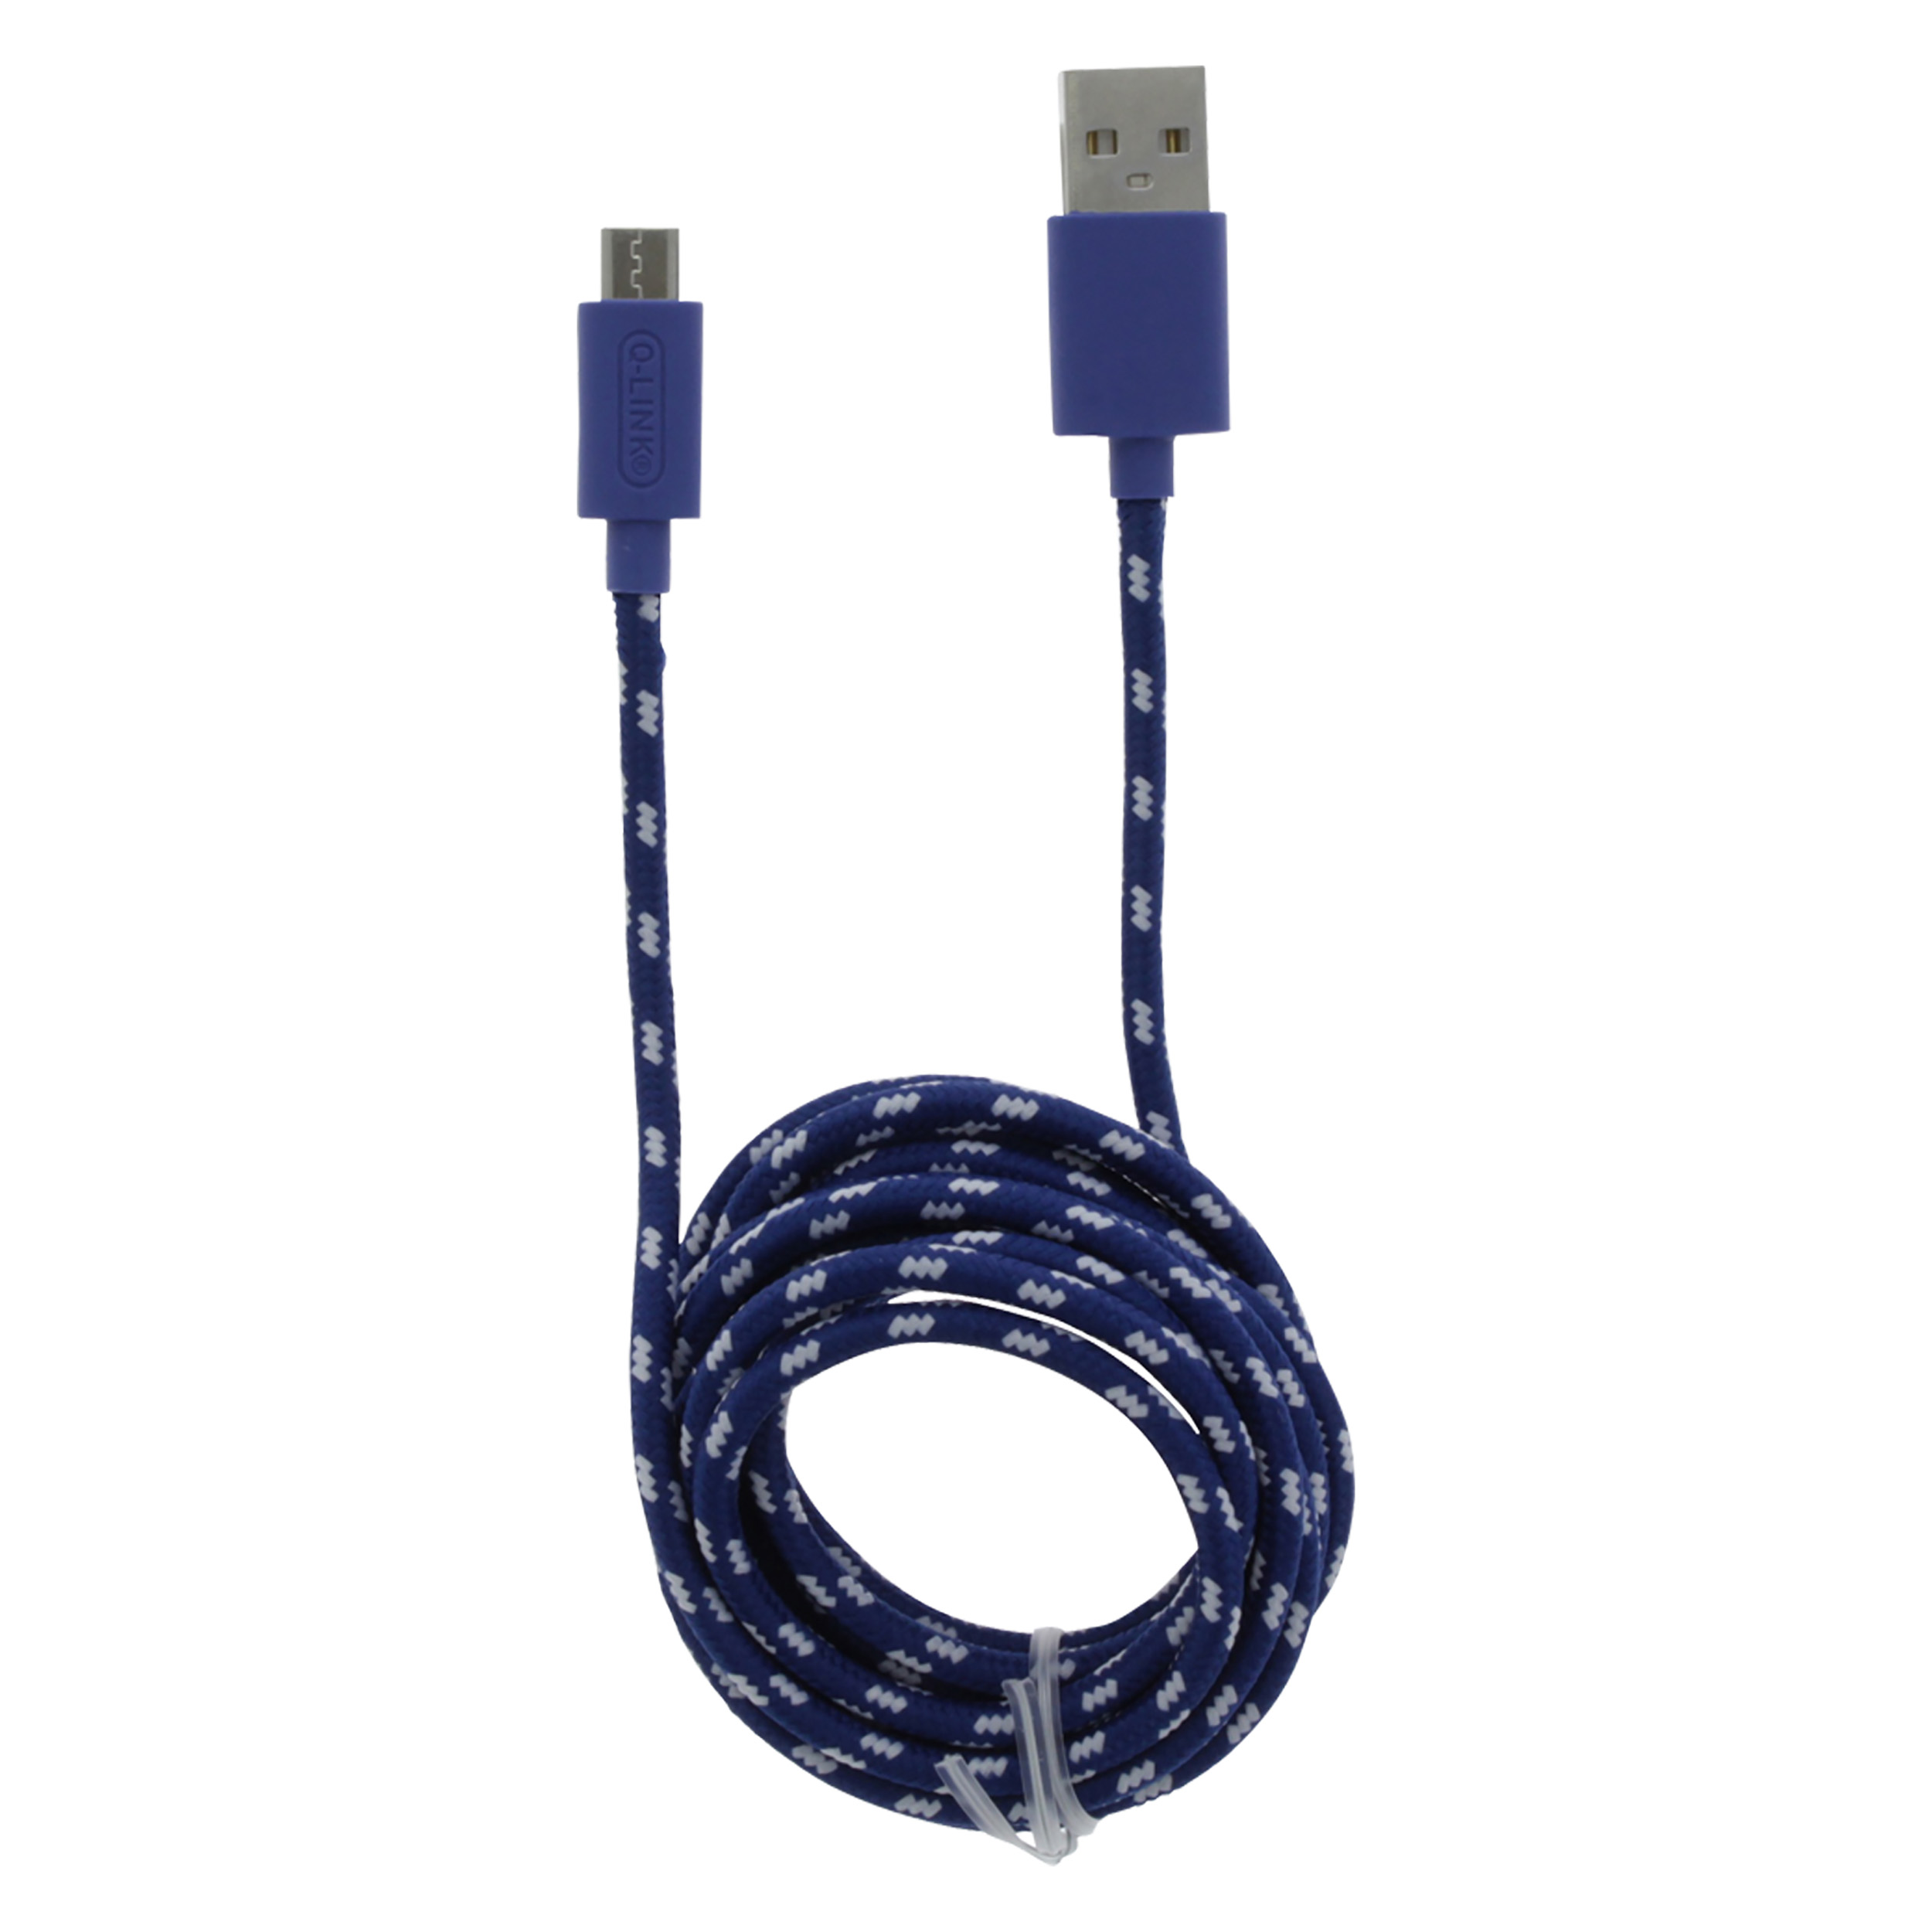 00.137.11 Q-Link  datakabel USB - Micro USB - 2 m - blauw/wit